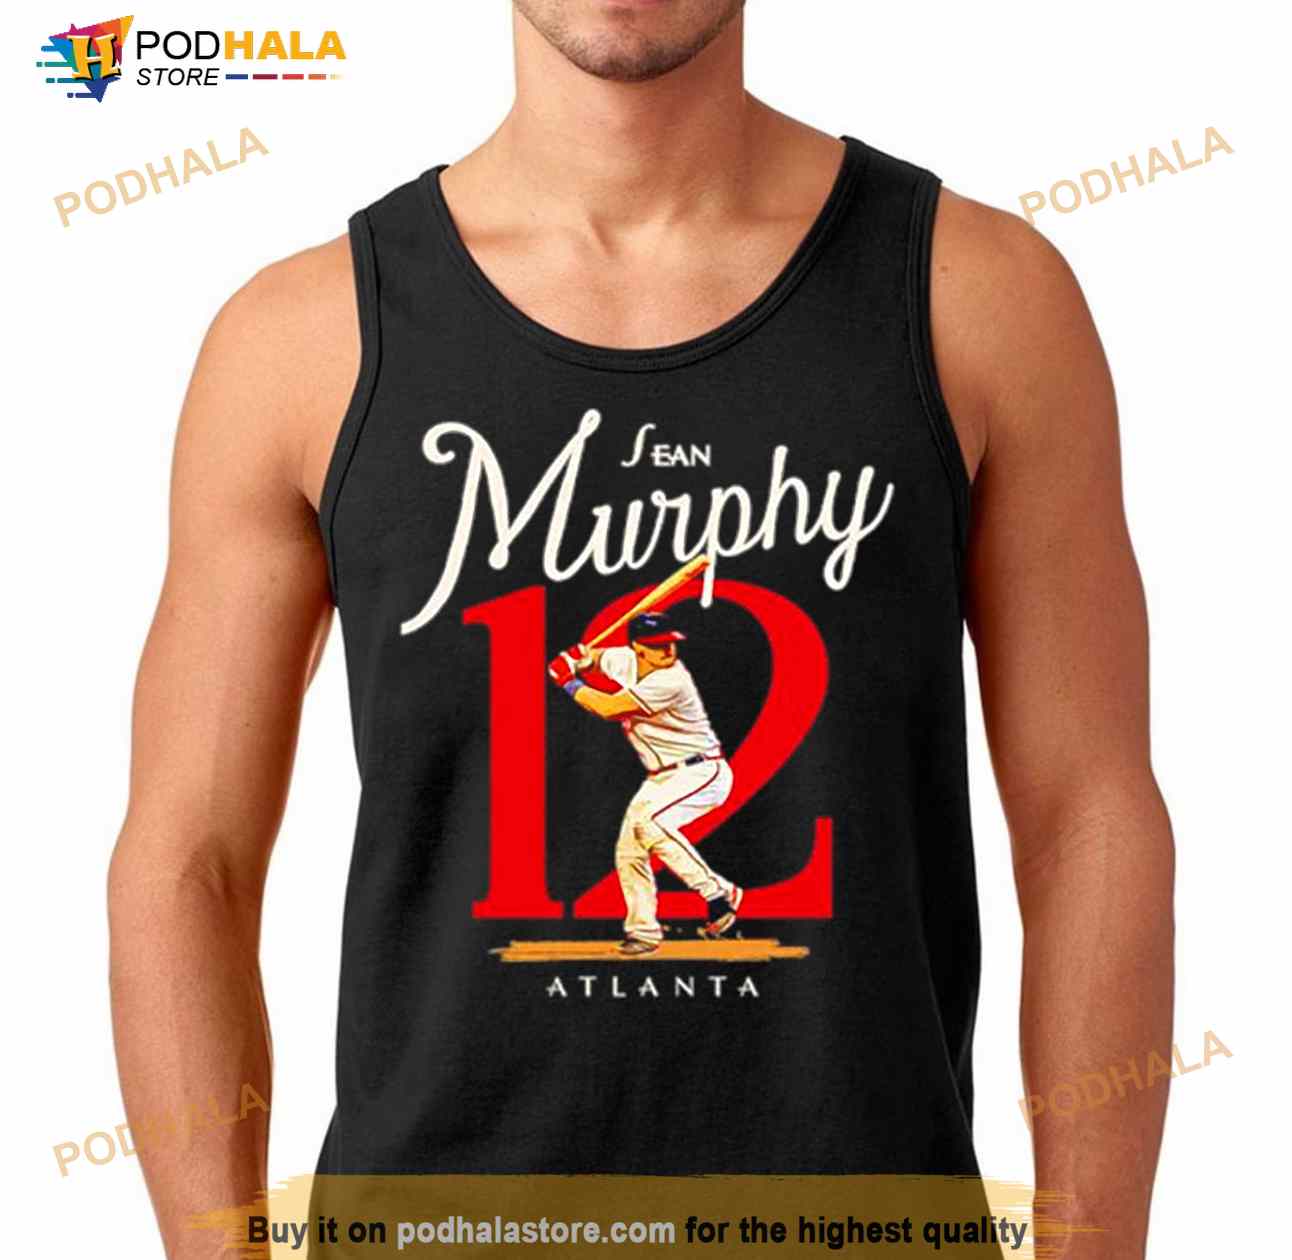 Sean Murphy 12 Atlanta Braves Shirt - Bring Your Ideas, Thoughts